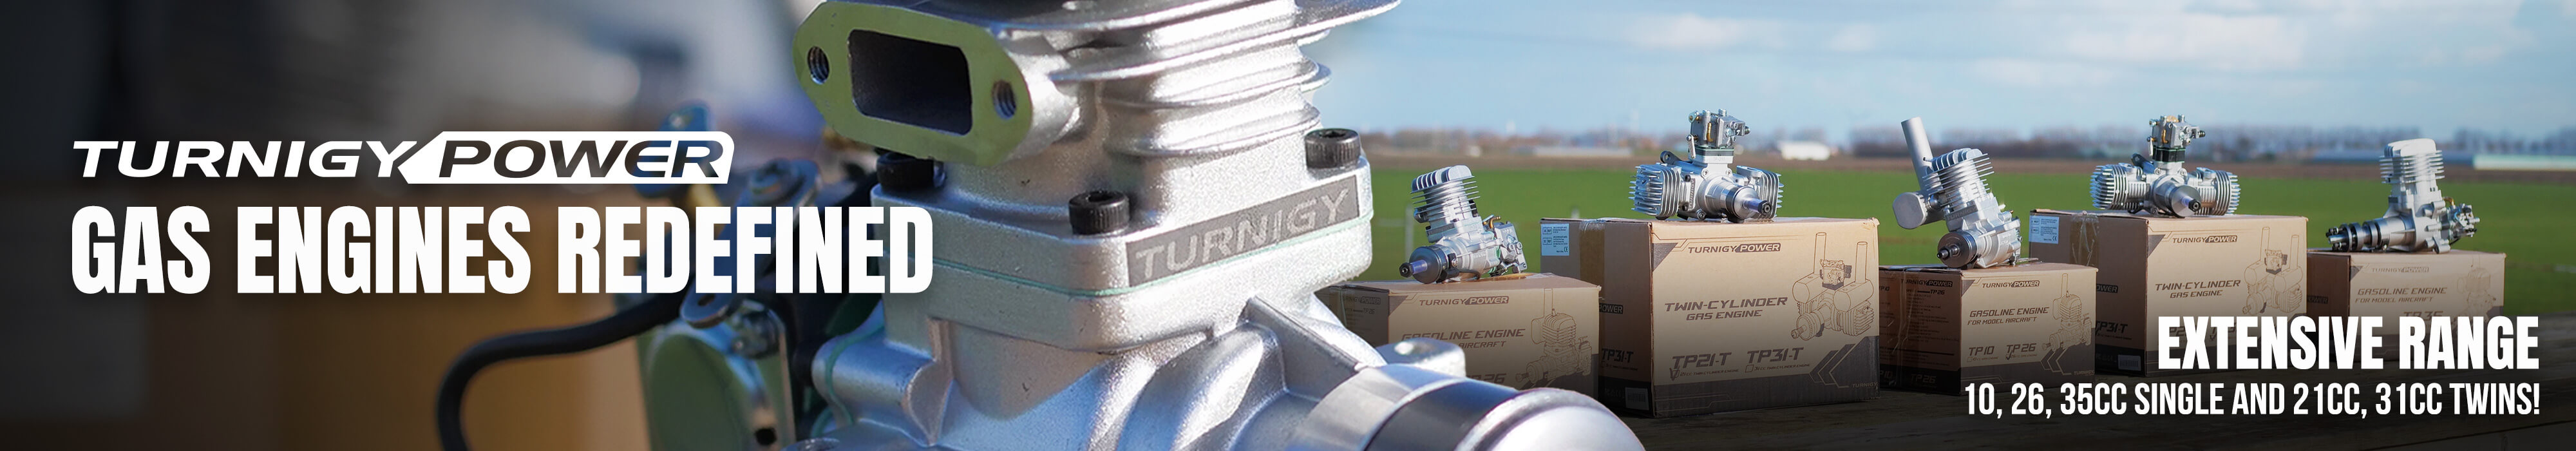 Turnigy Power gas engines